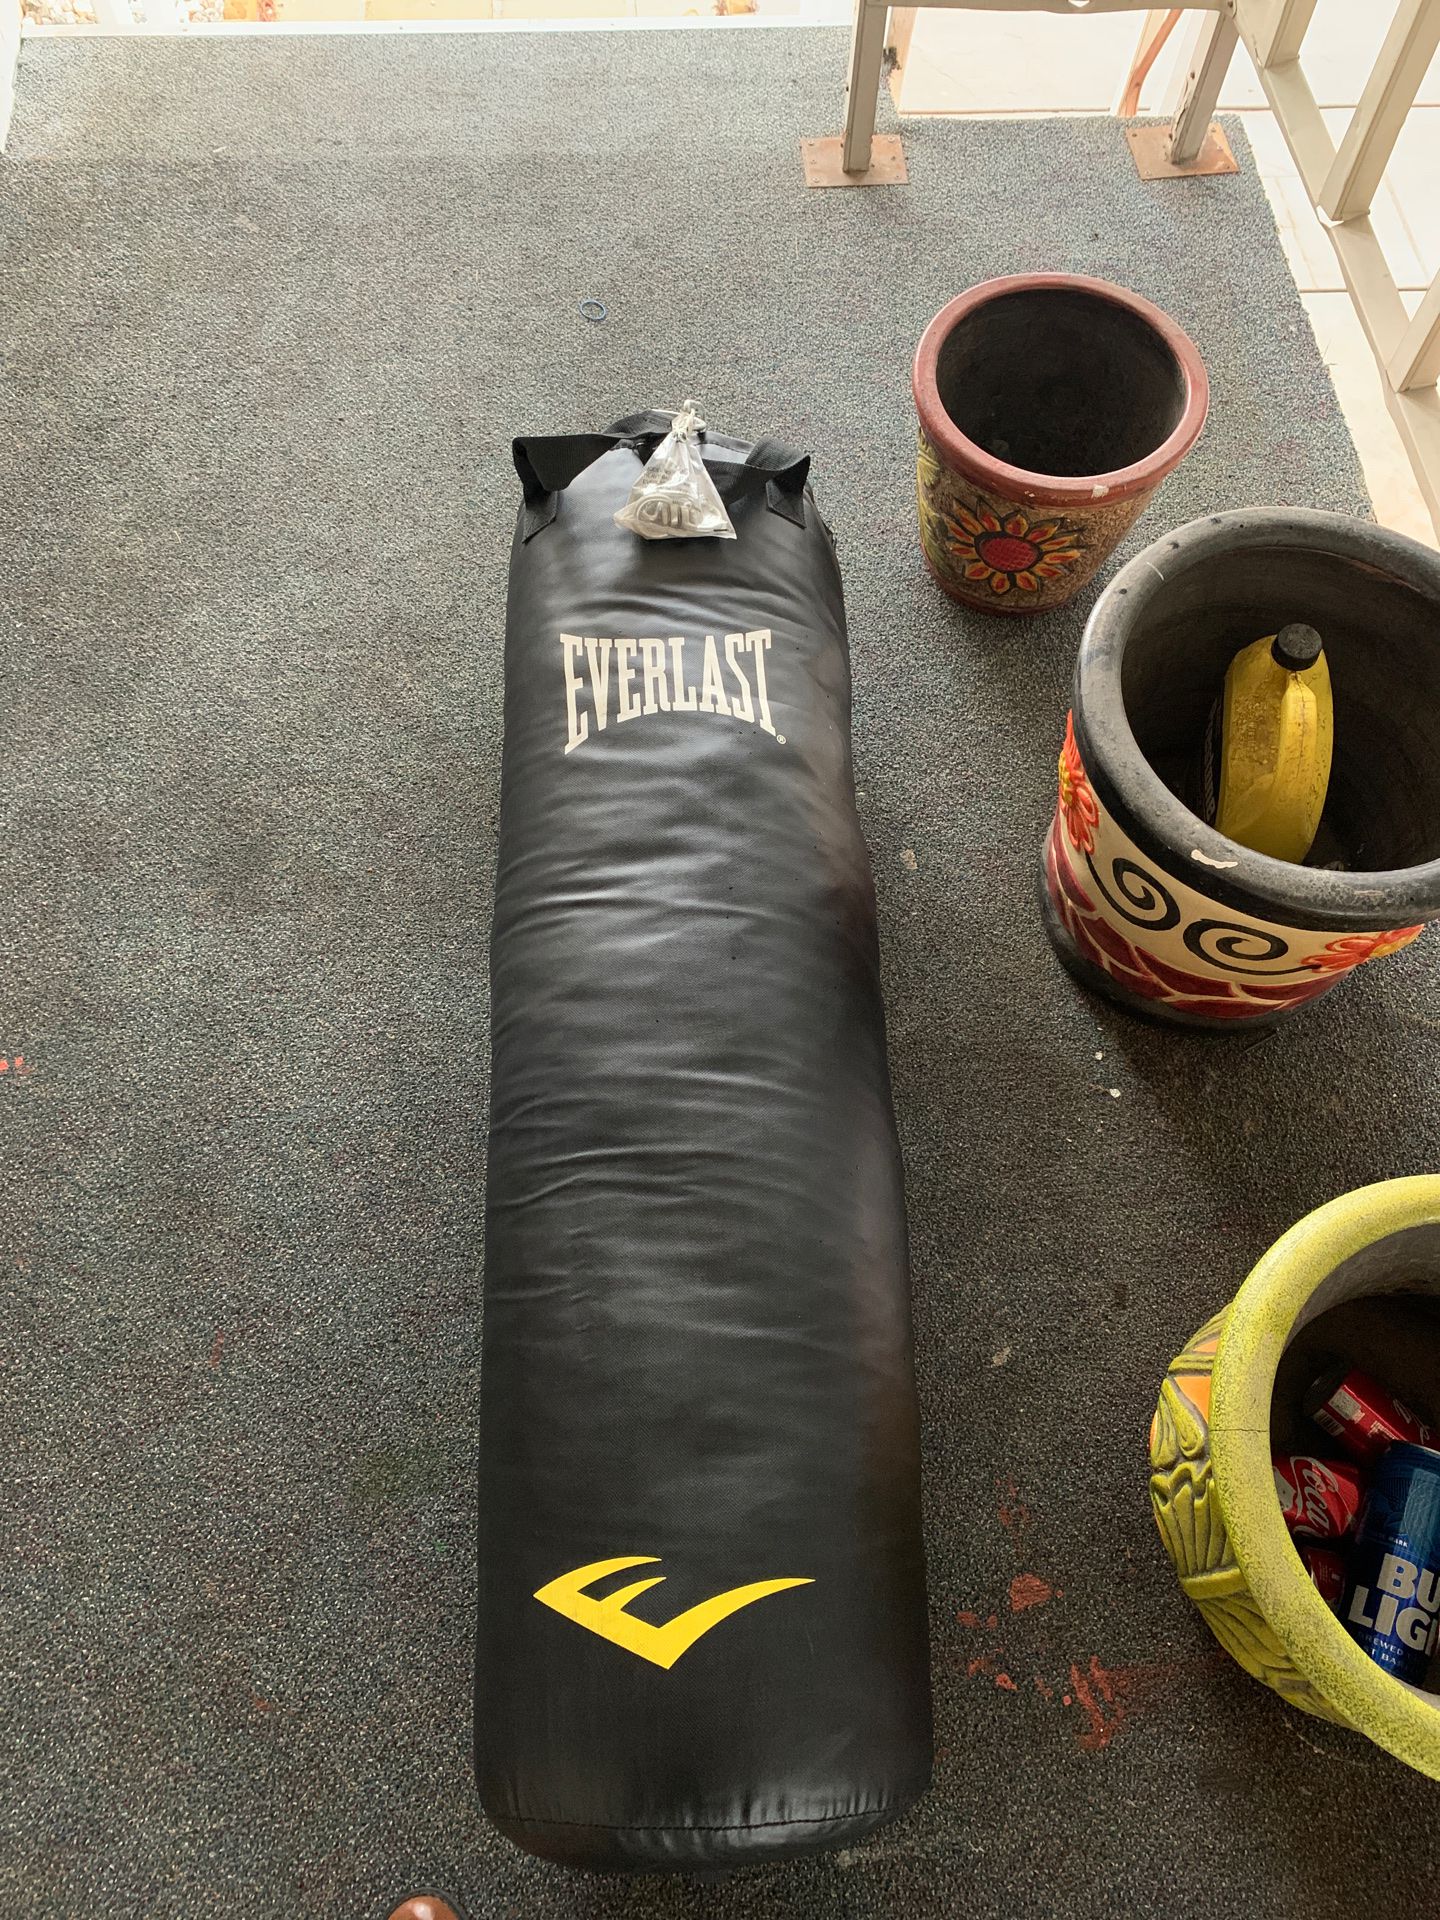 Everlast 100 pound heavy weight punching bag (brand new)